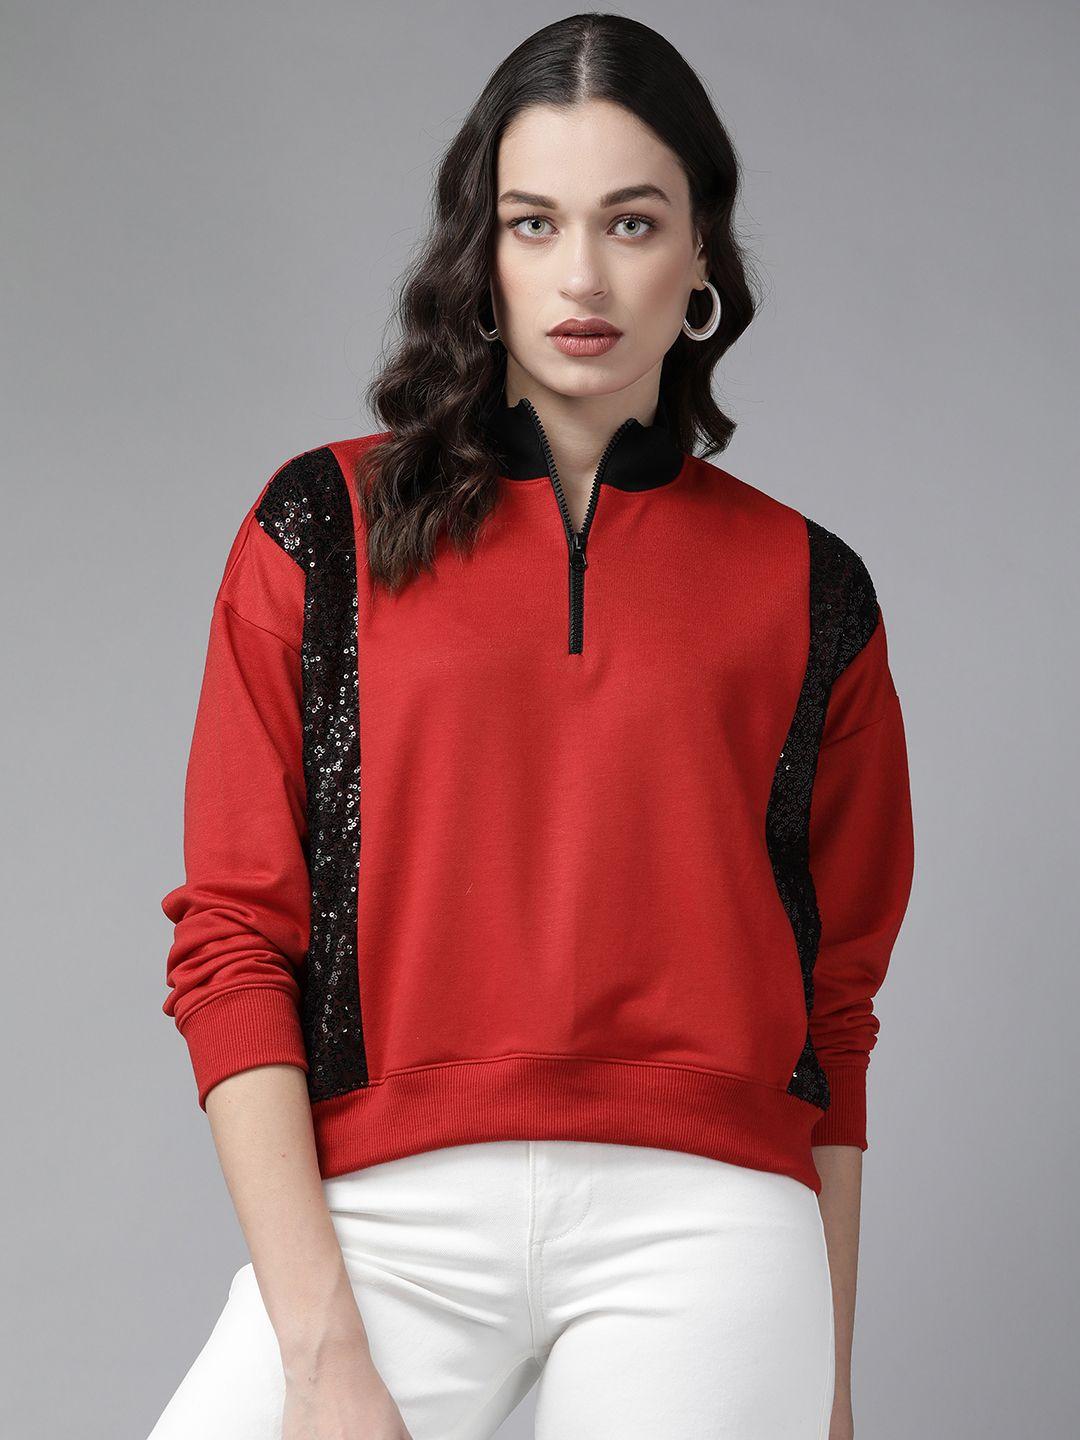 kassually-women-red-&-black-sequinned-sweatshirt